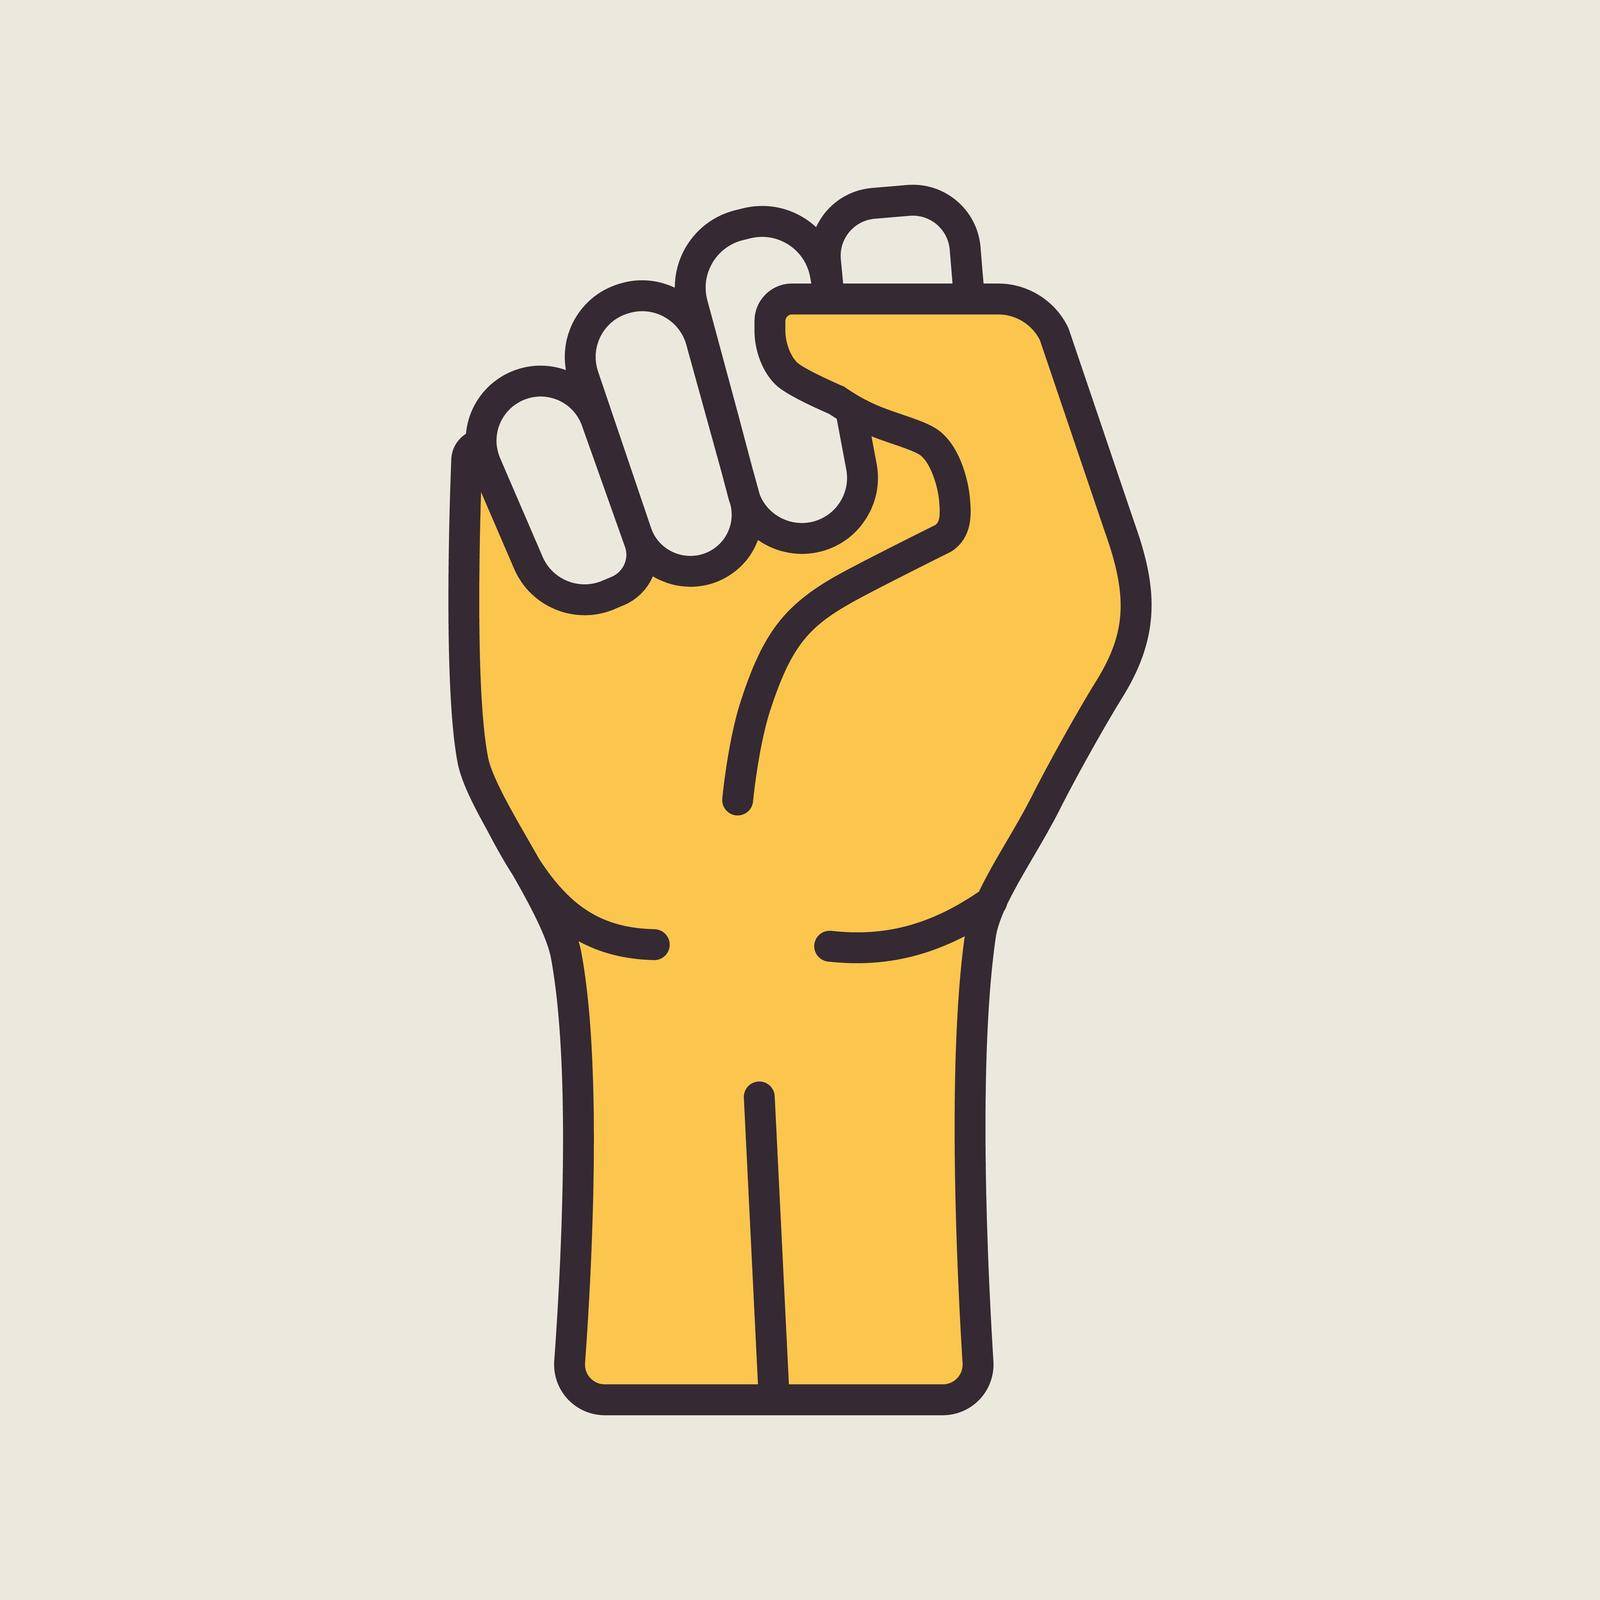 Fist raised up isolated vector icon. Demonstration, manifestation, protest, strike, revolution